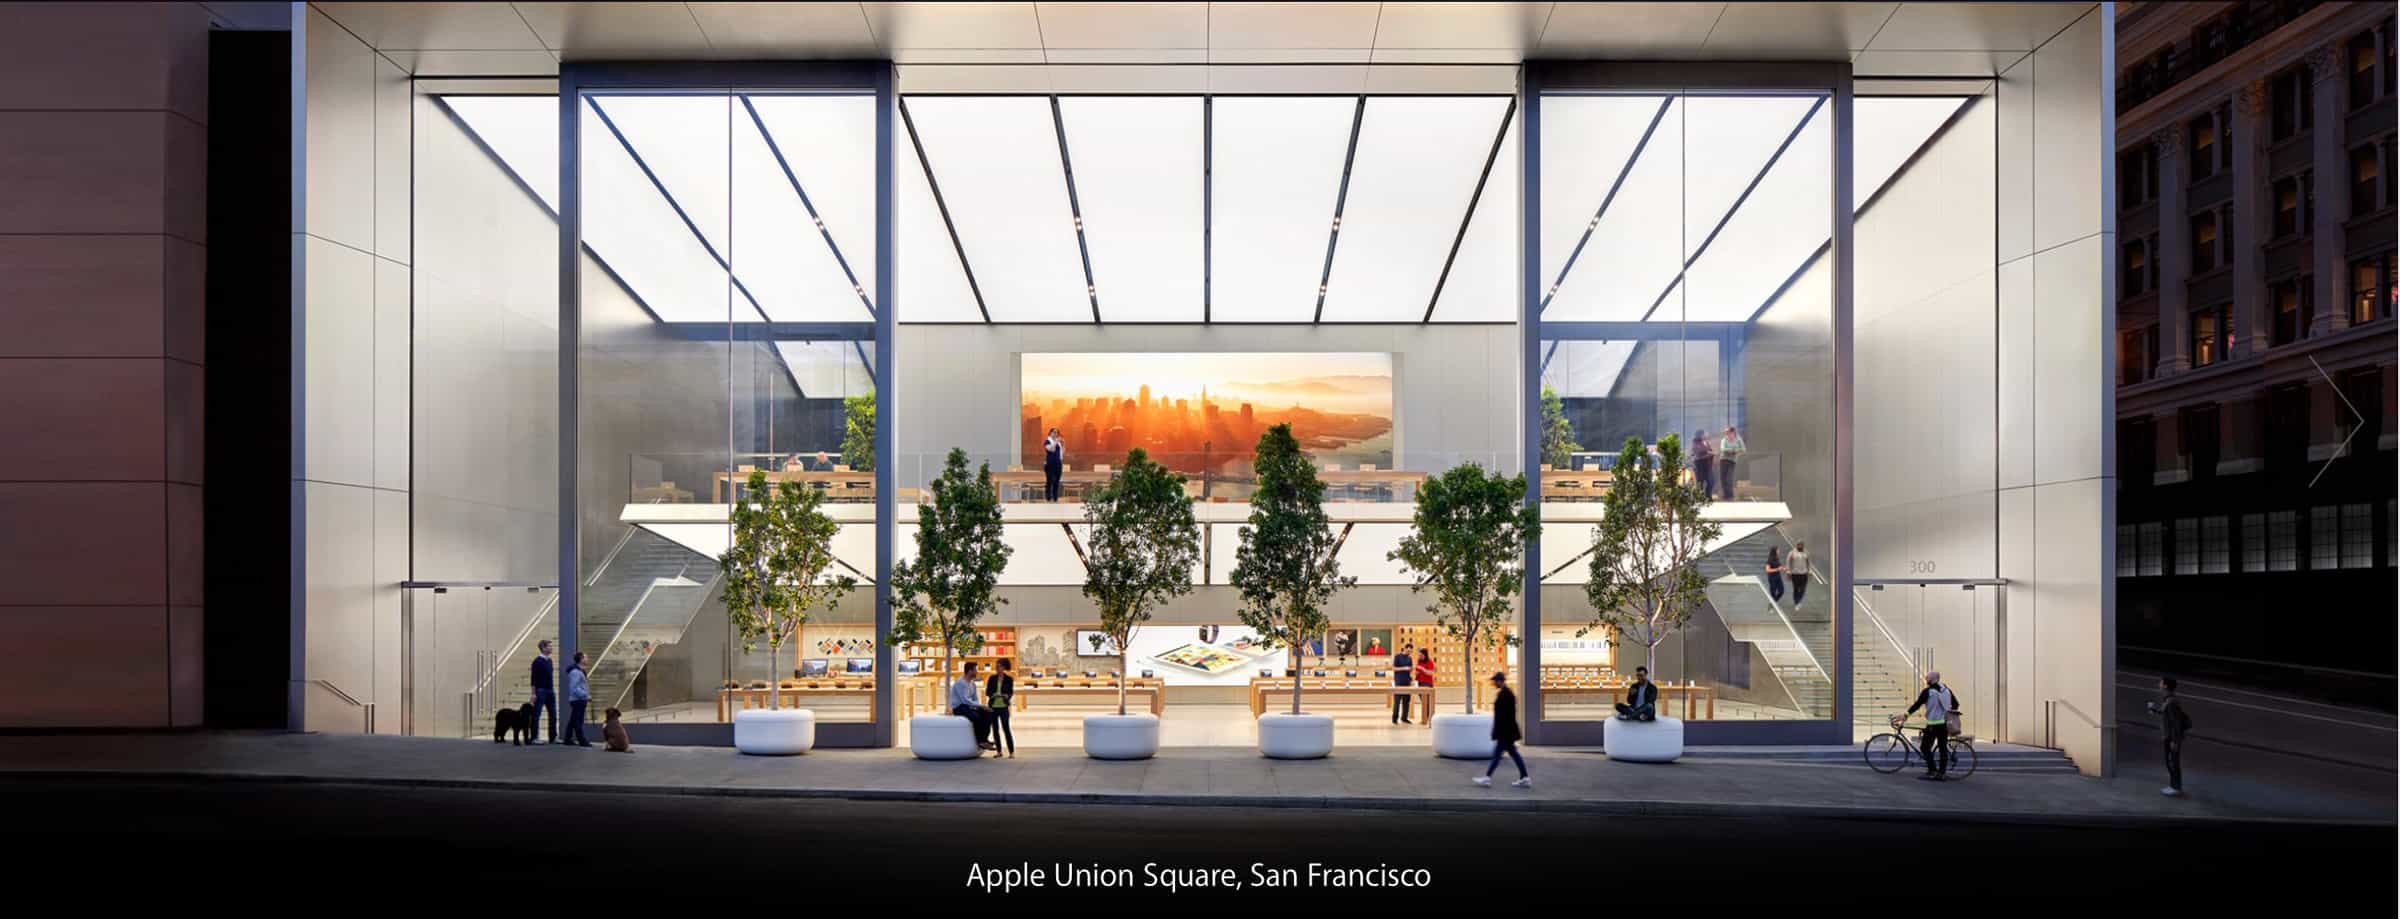 Apple Union Square, San Francisco